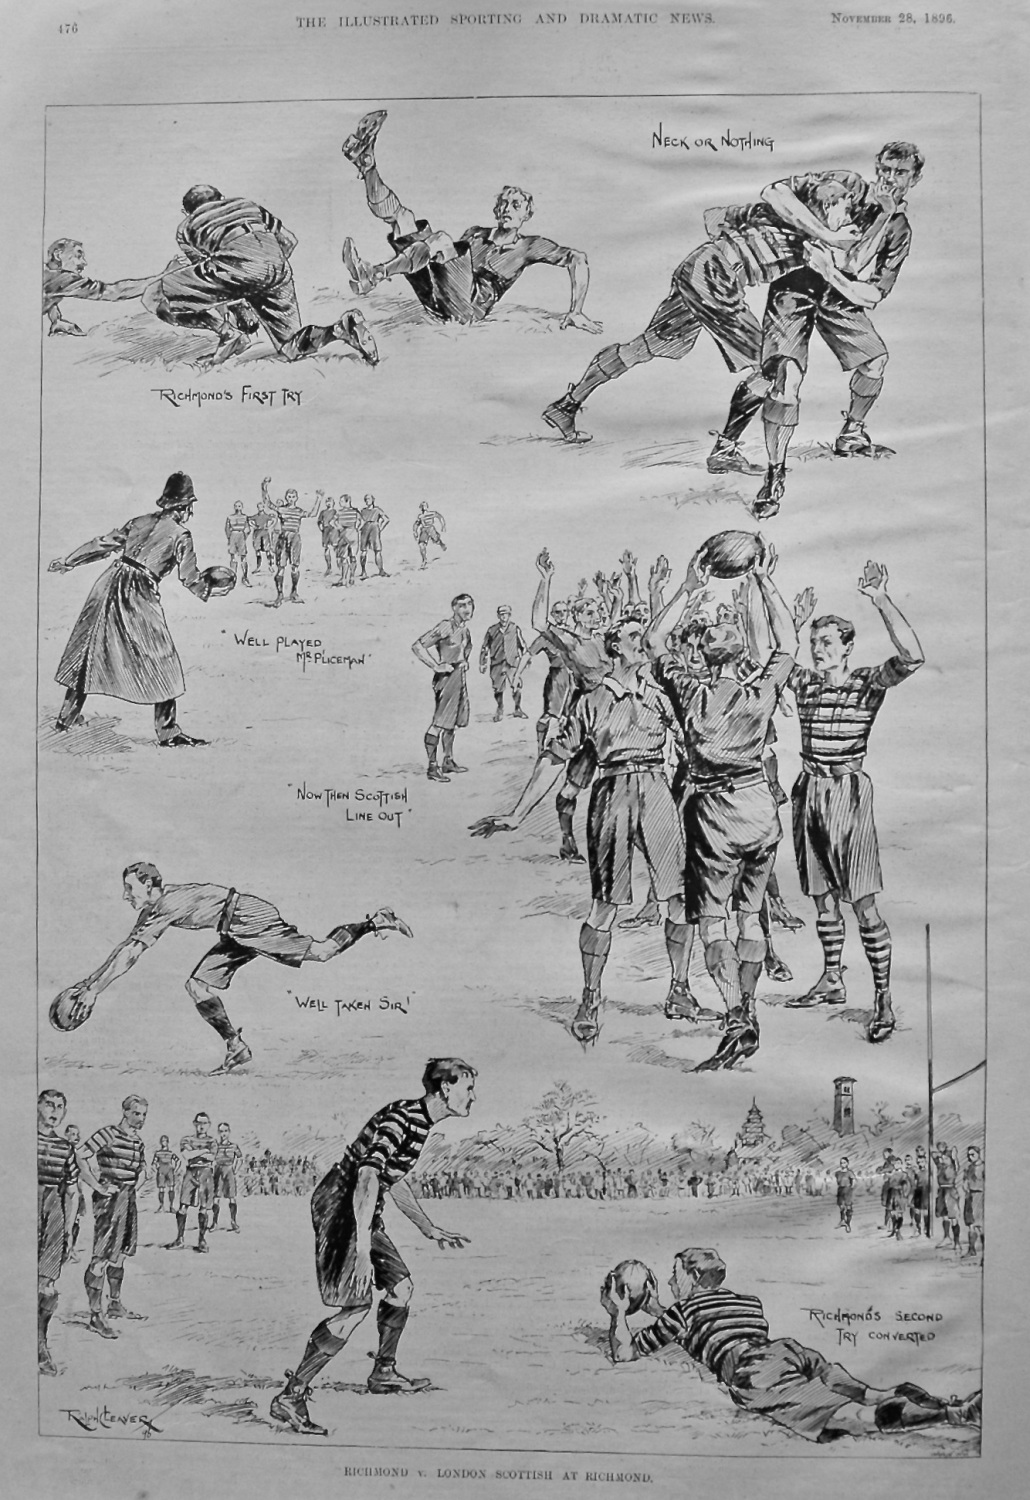 Richmond v. London Scottish at Richmond.  (Rugby) 1896.